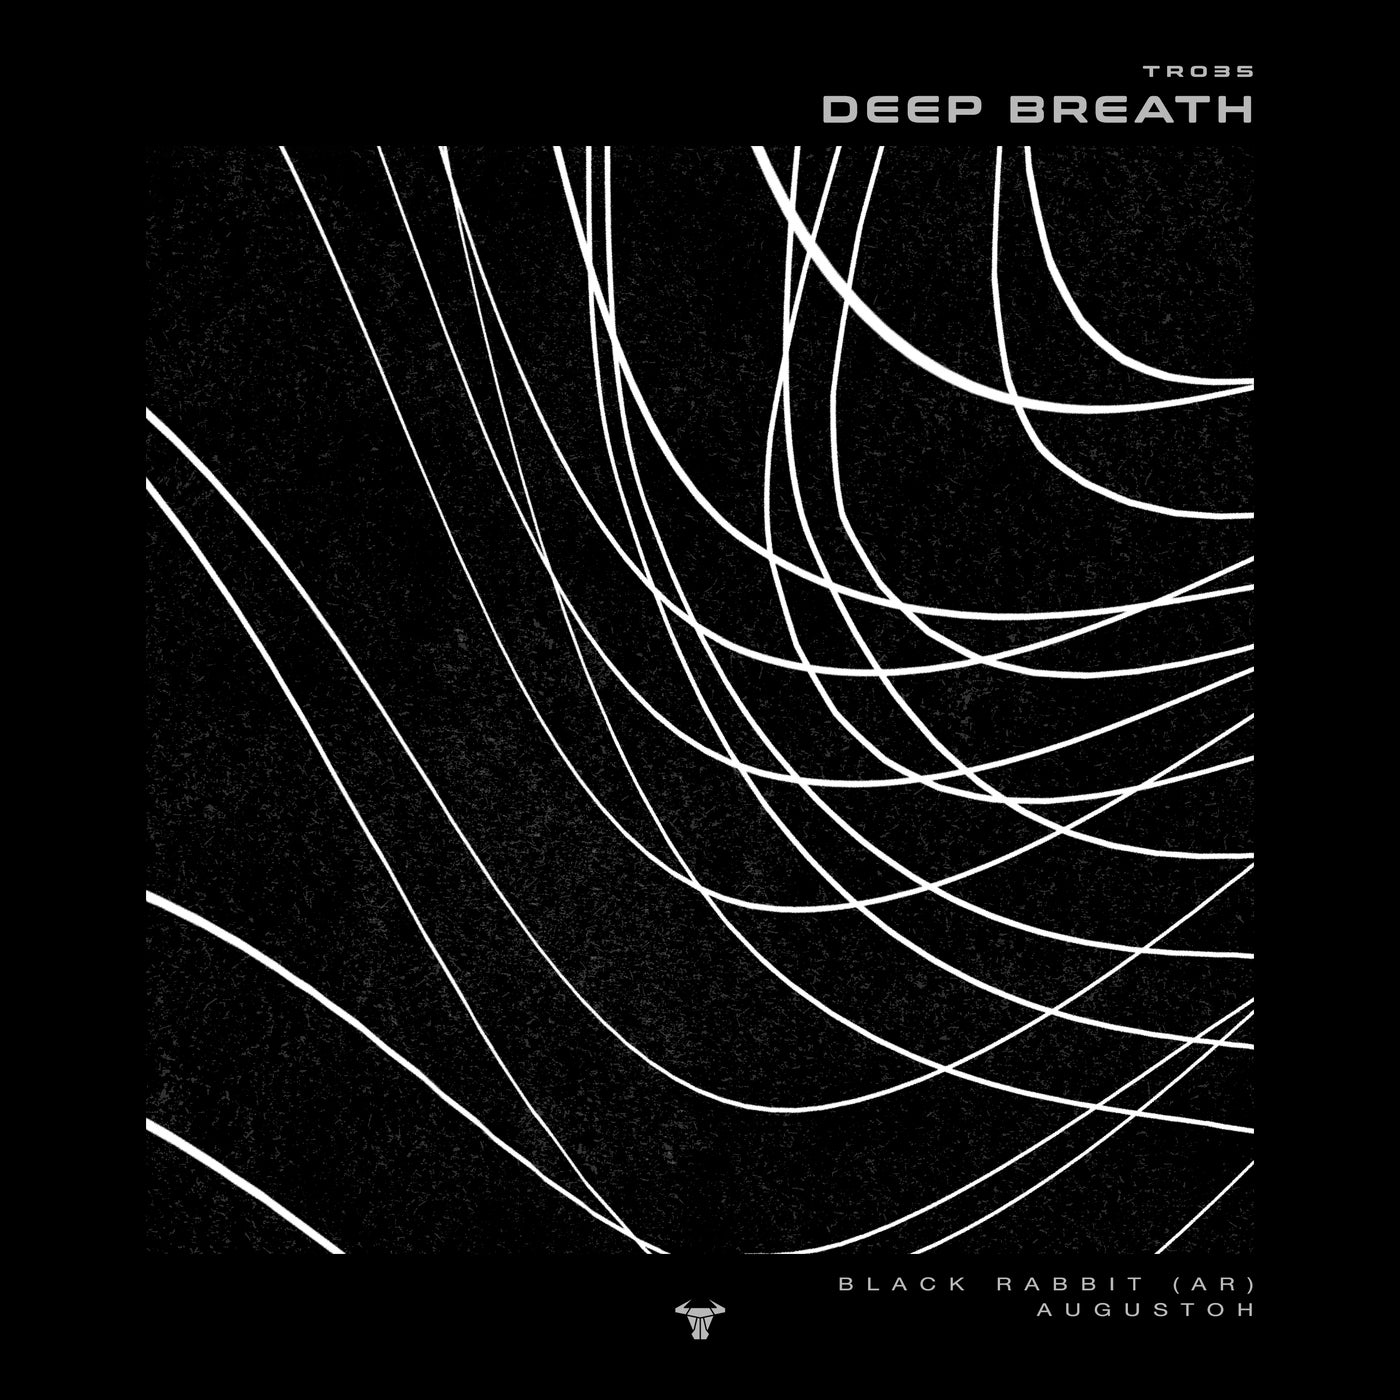 Cover - BLACK RABBIT (AR), AUGUSTOH - Deep Breath (Original Mix)